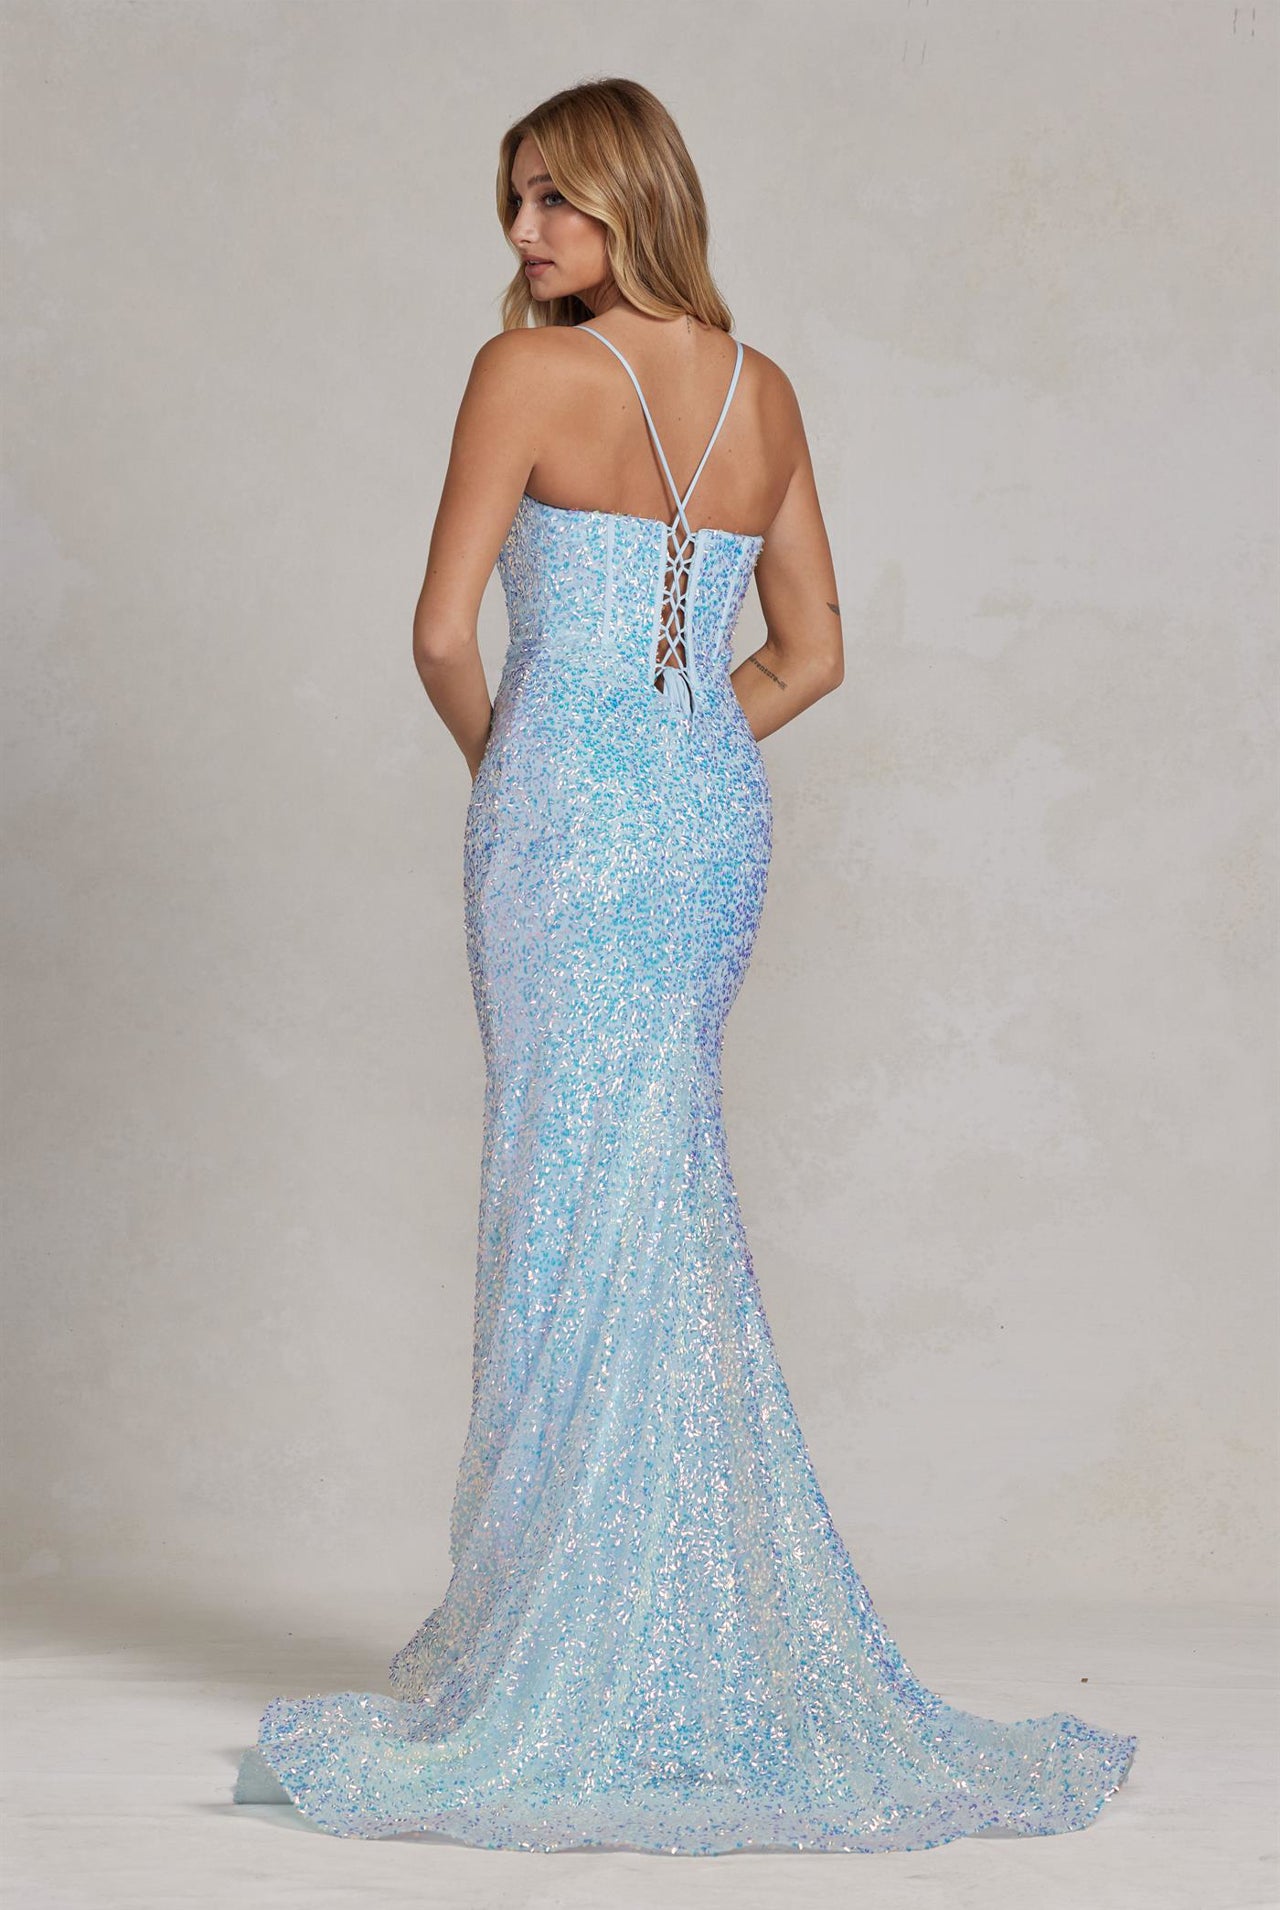 Embroidered Sequins Illusion V-Neck Open Back Mermaid Long Evening Dress NXC1094-Evening Dress-smcfashion.com